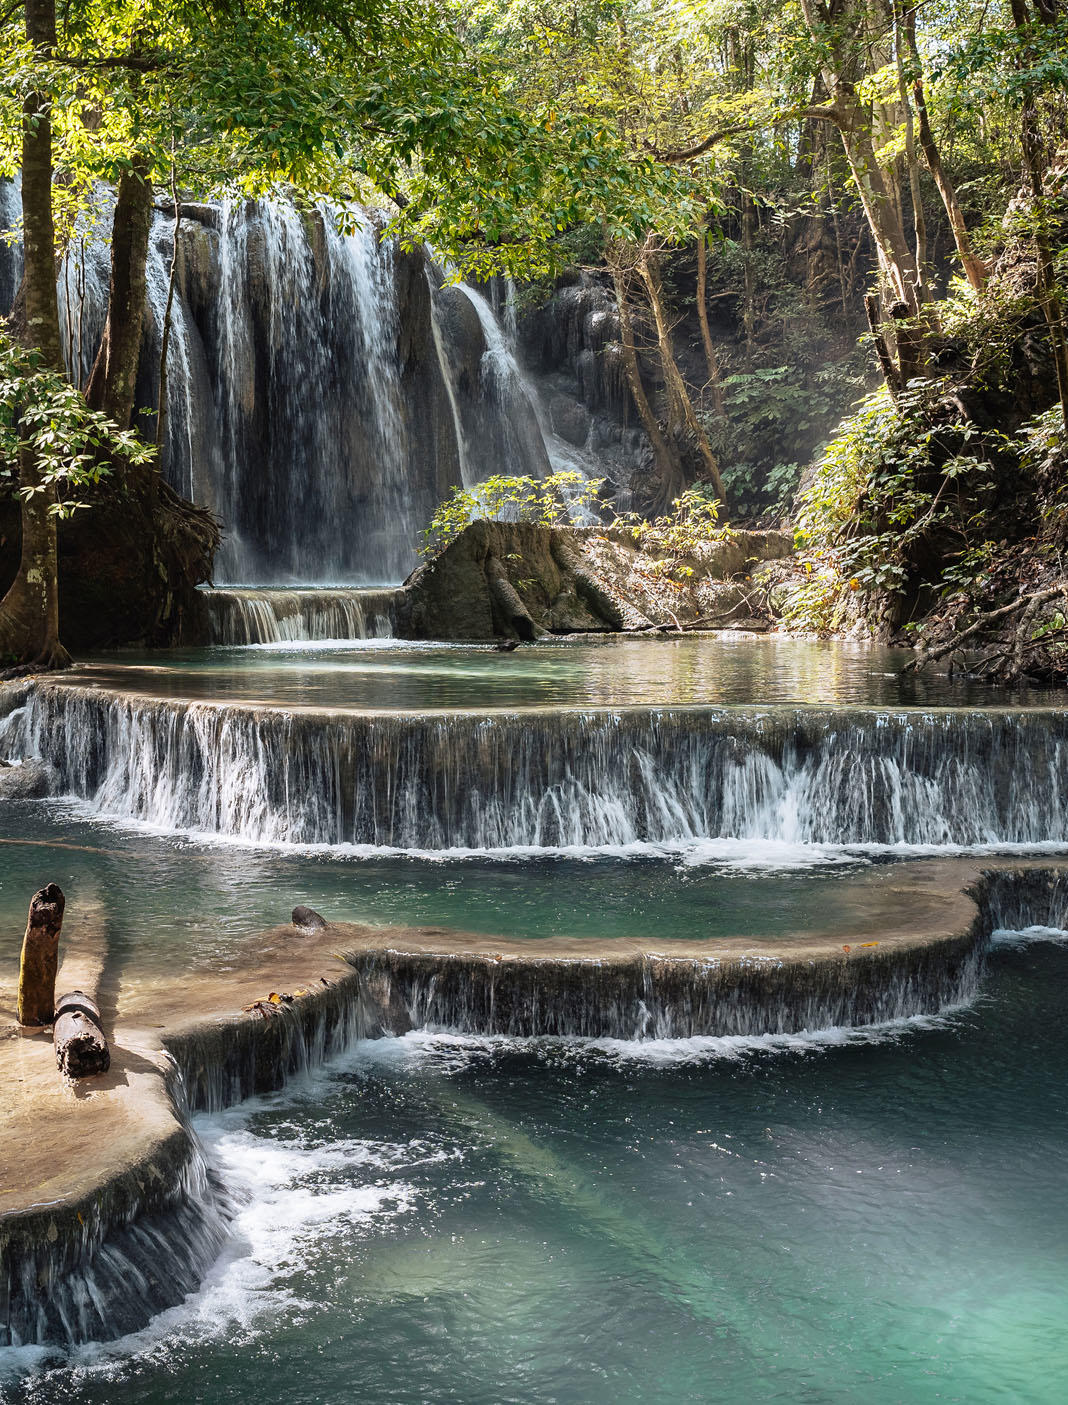 Amanwana, Moyo Satonda National Park, Indonesia - Mata Jitu Waterfall